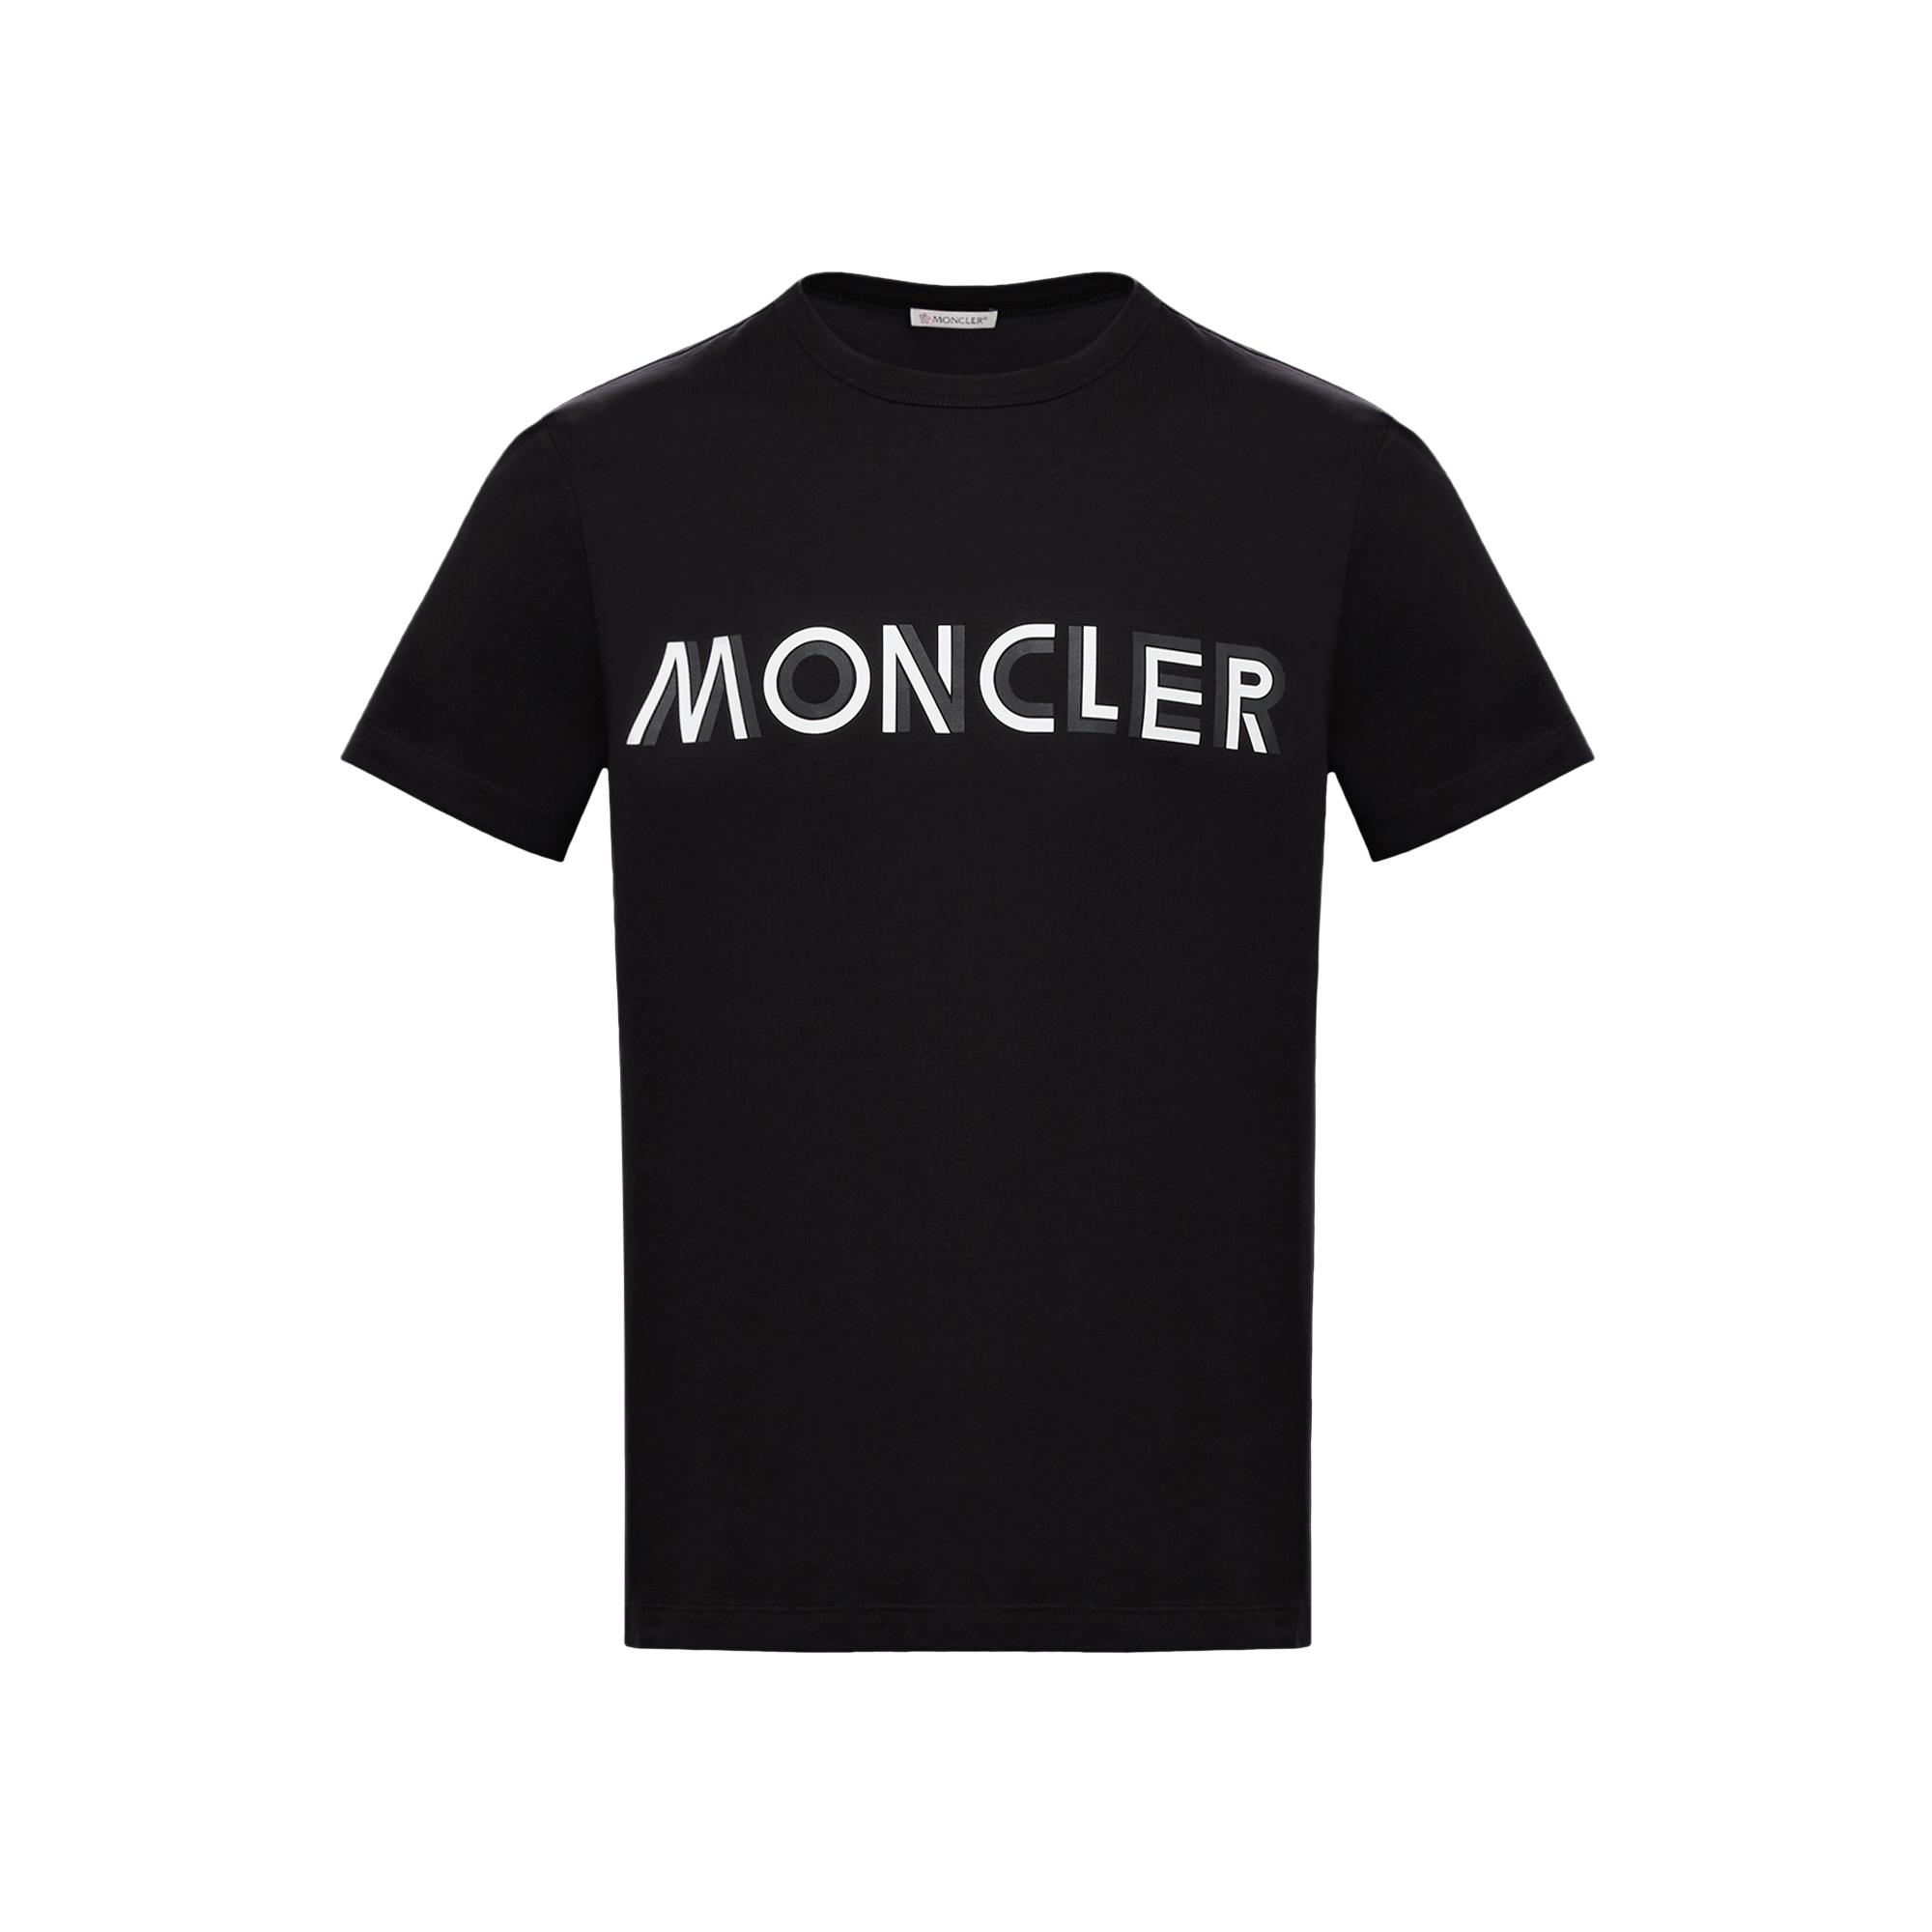 Moncler T-shirt in Black for Men - Lyst